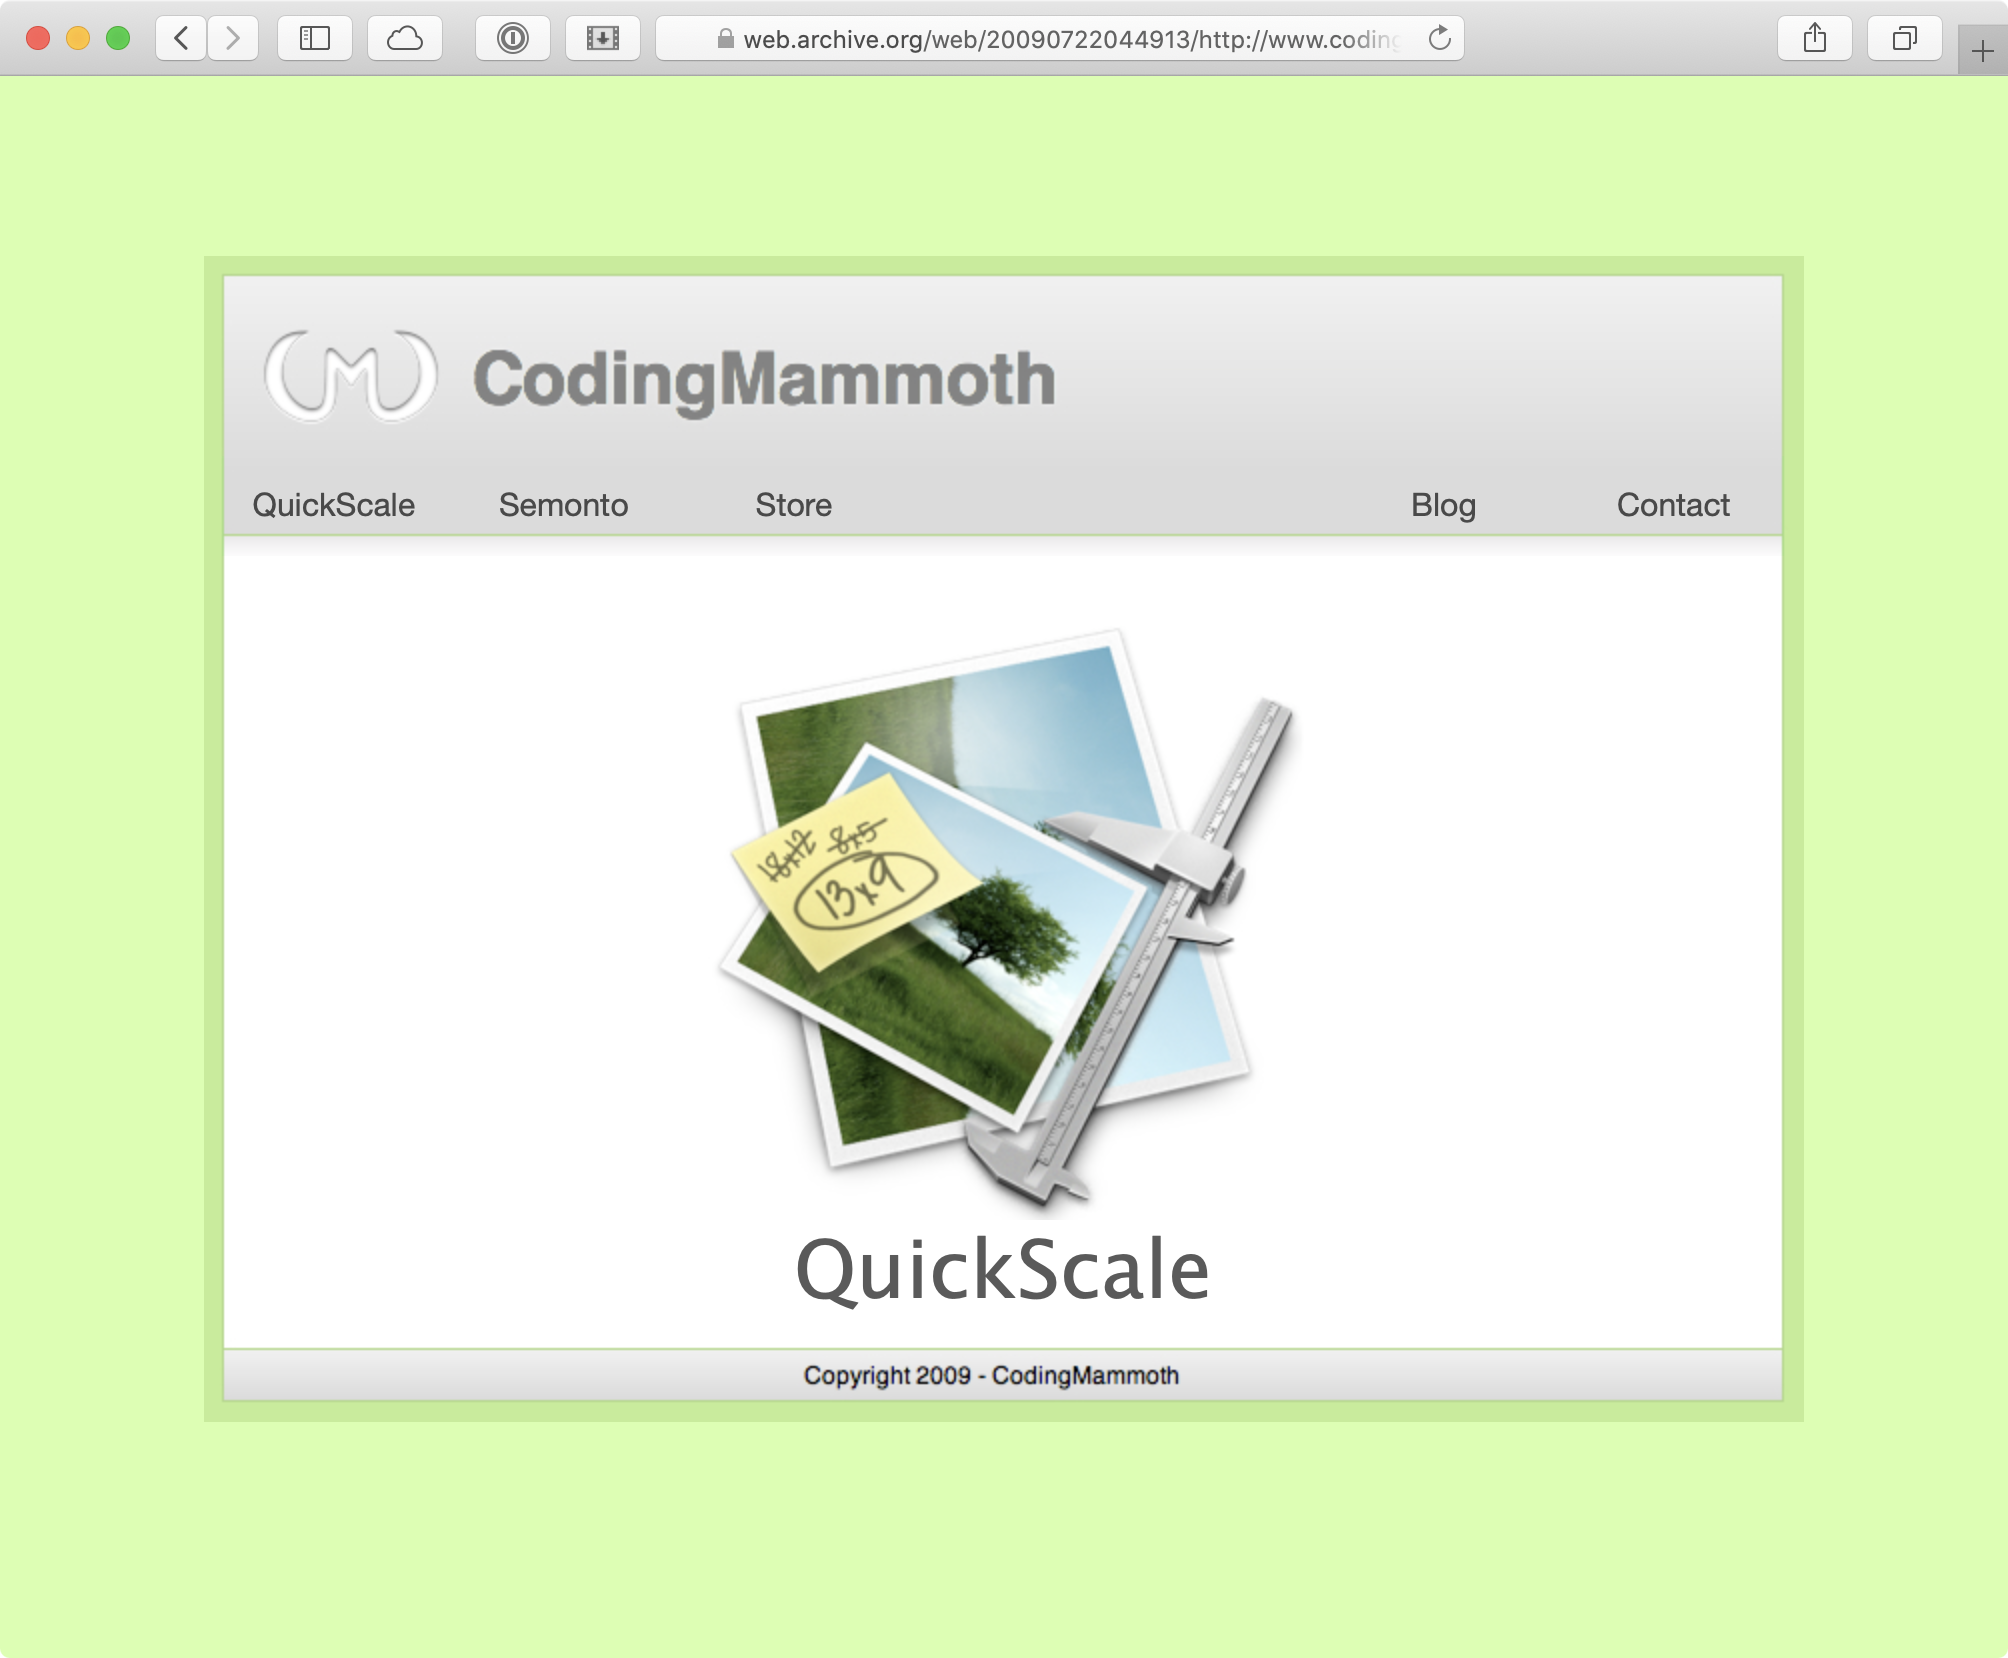 Website Coding Mammoth 2009